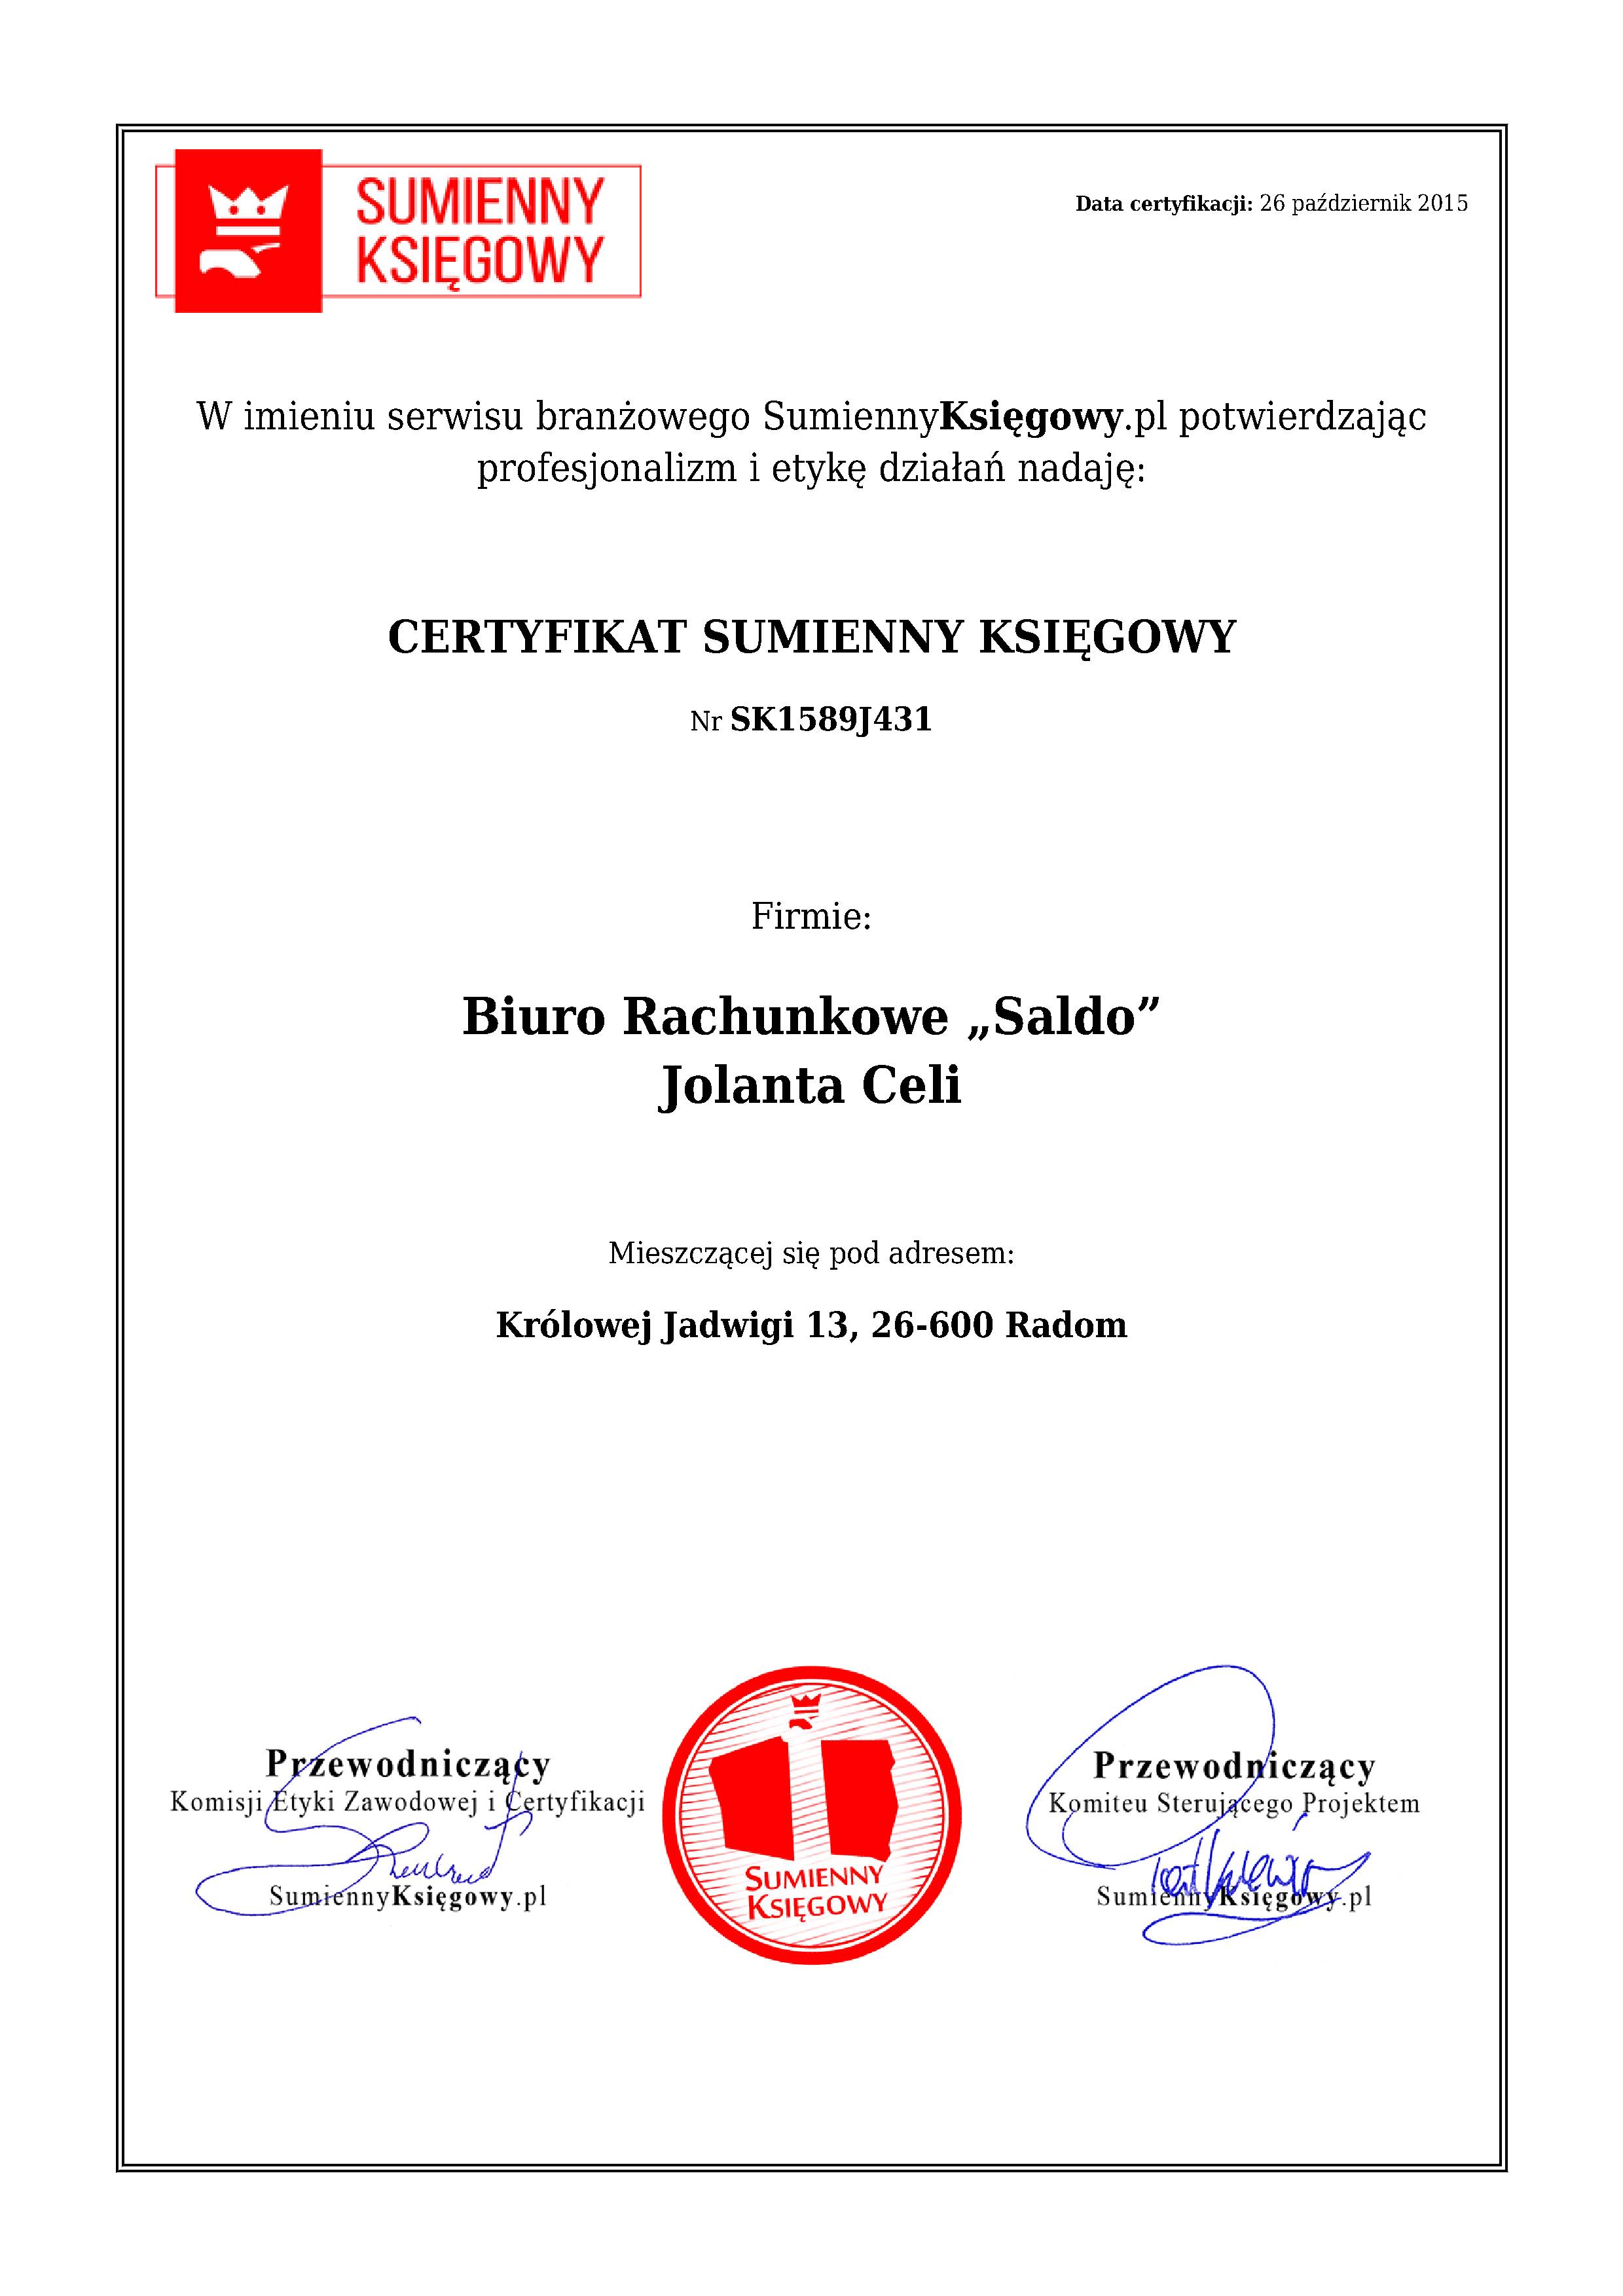 Biuro Rachunkowe „Saldo” Jolanta Celi certyfikat 1